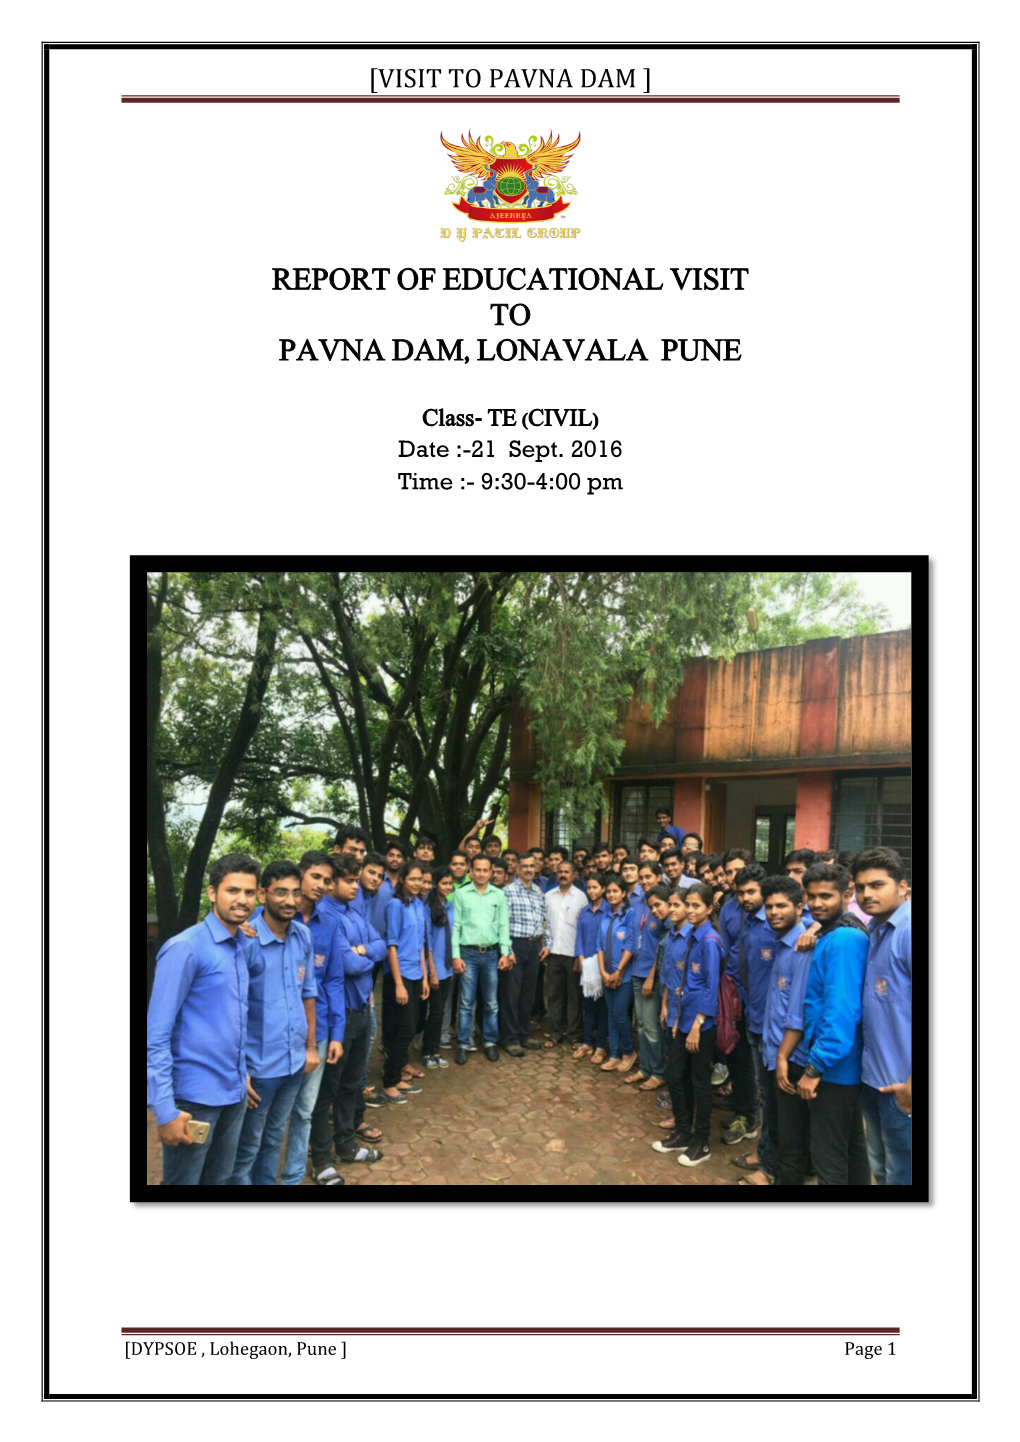 Report of Educational Visit to Pavna Dam, Lonavala Pune